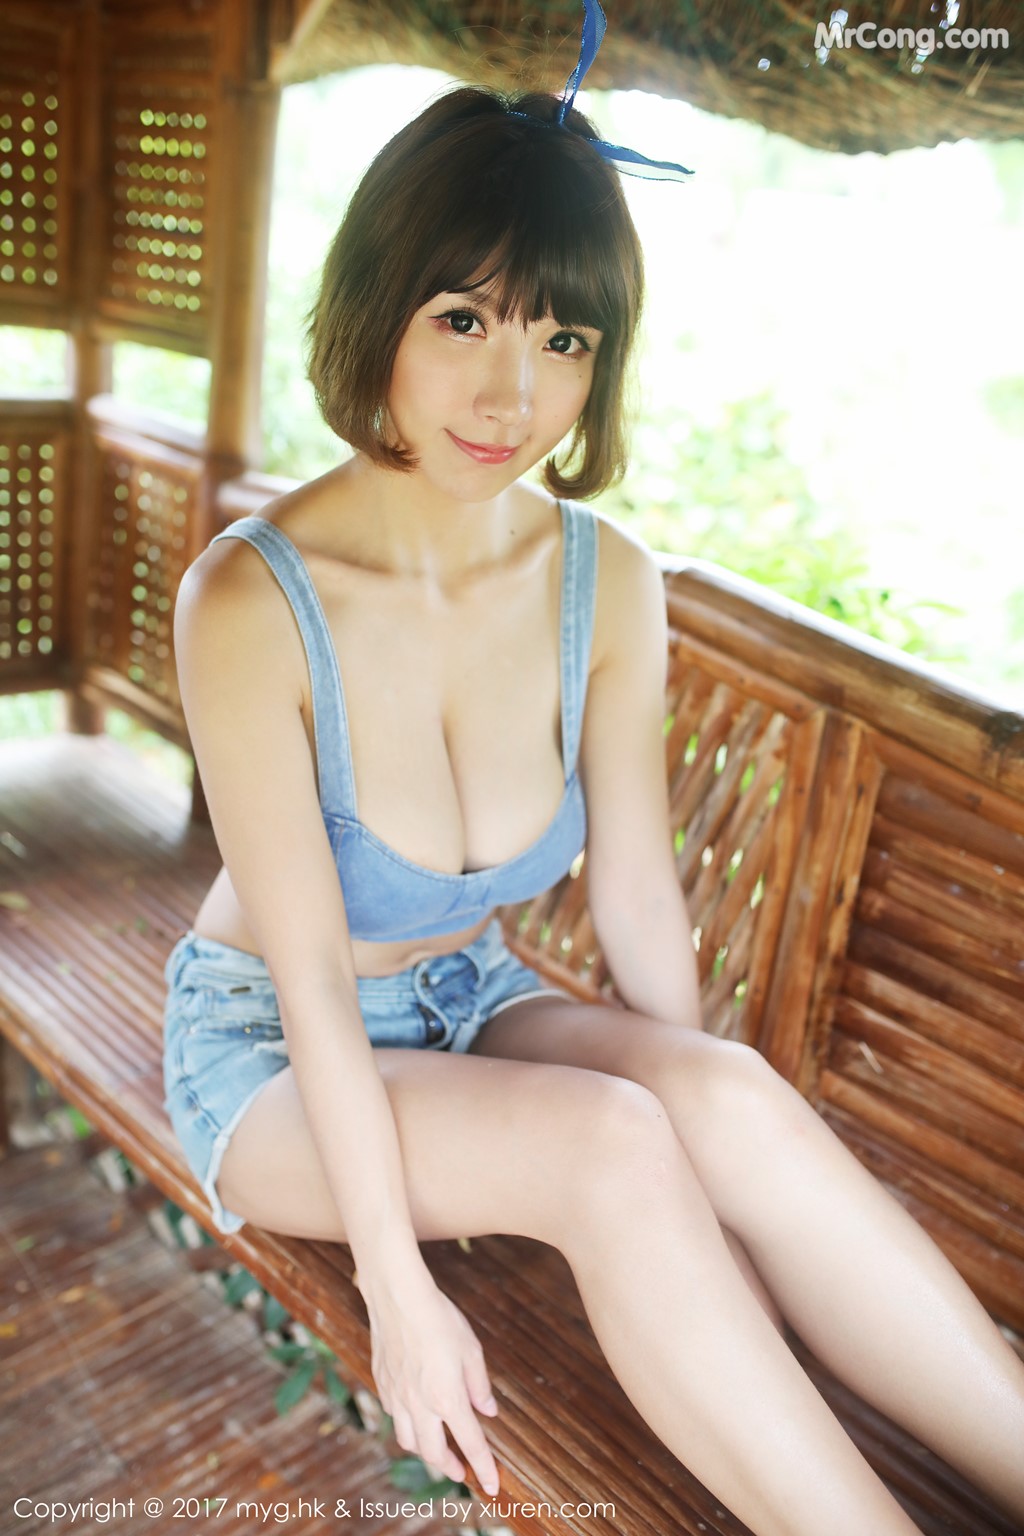 MyGirl Vol. 6262: Sunny&#39;s model (晓 茜) (75 photos) photo 1-16